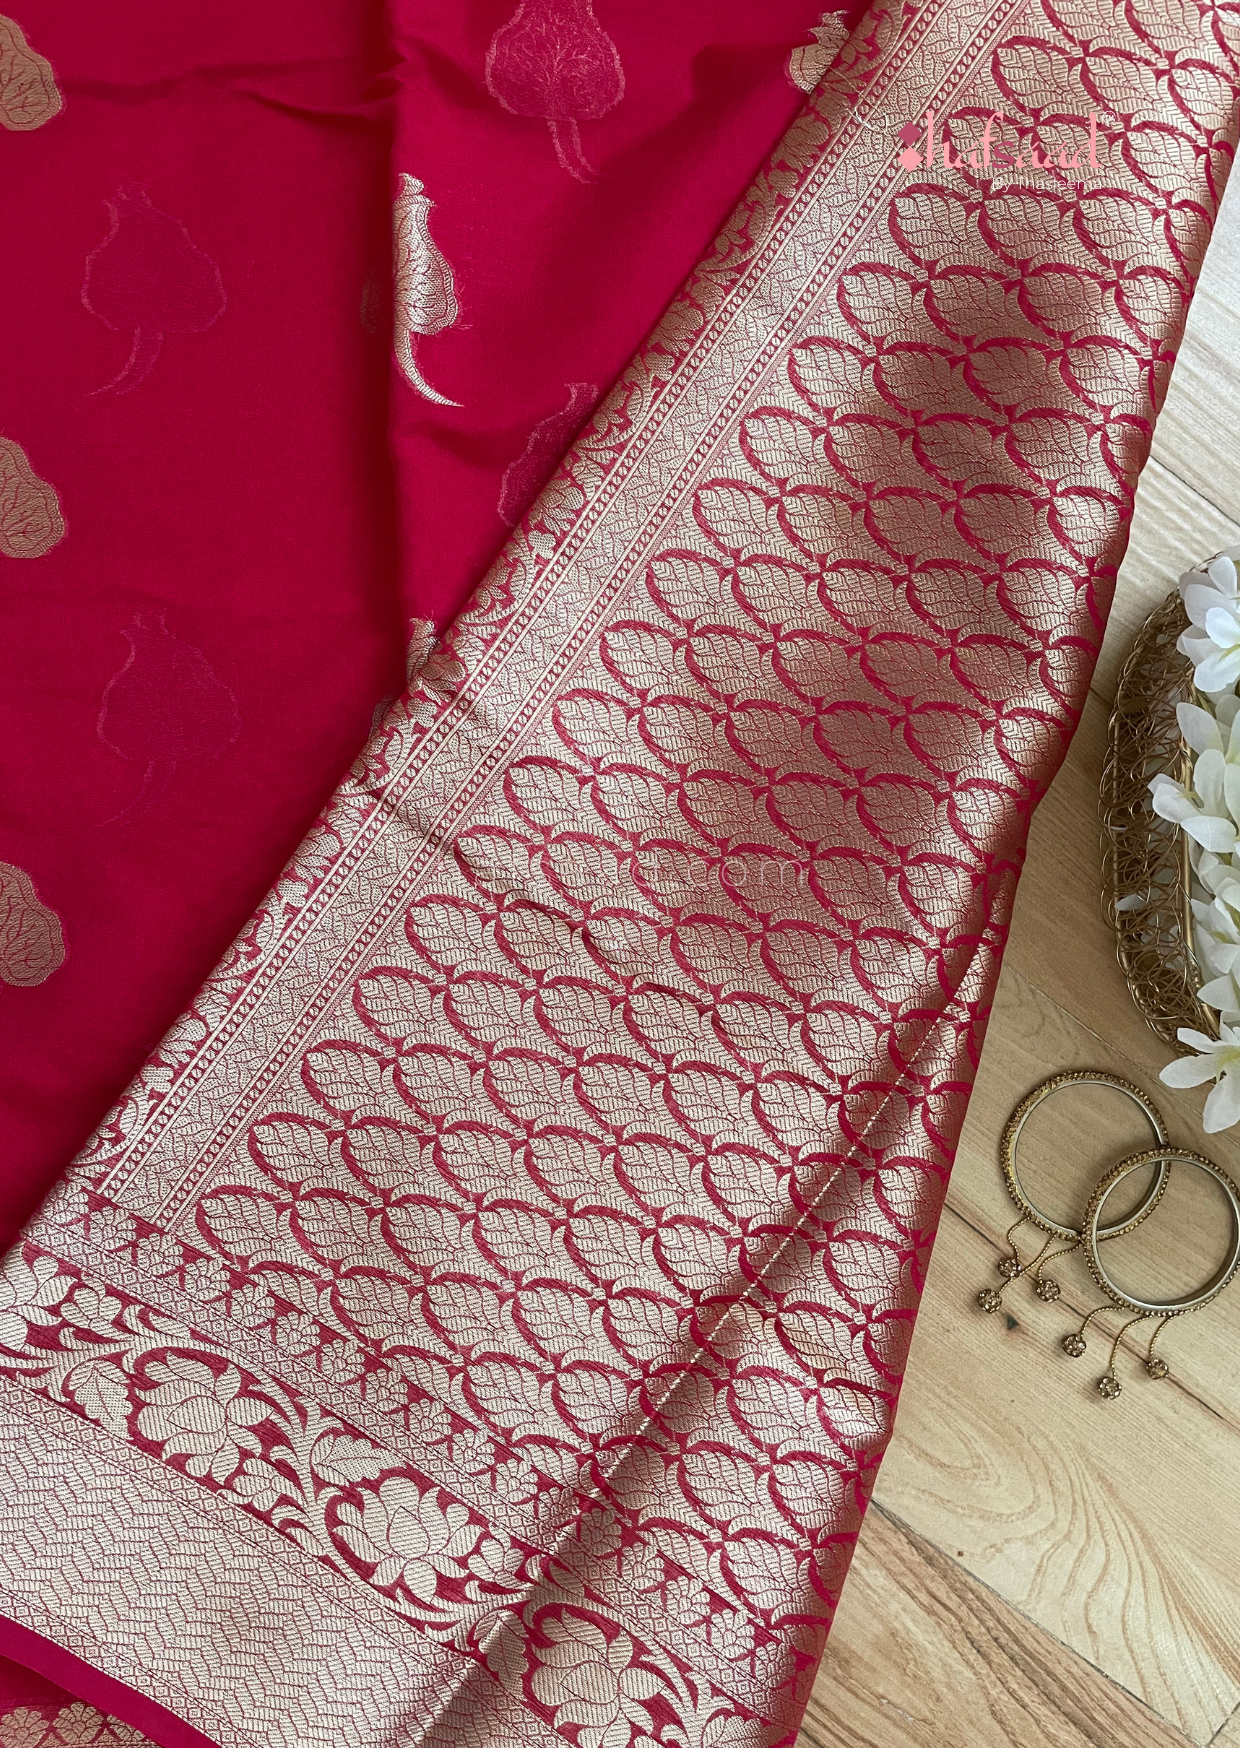 Amrutha-Hot pink soft silk saree